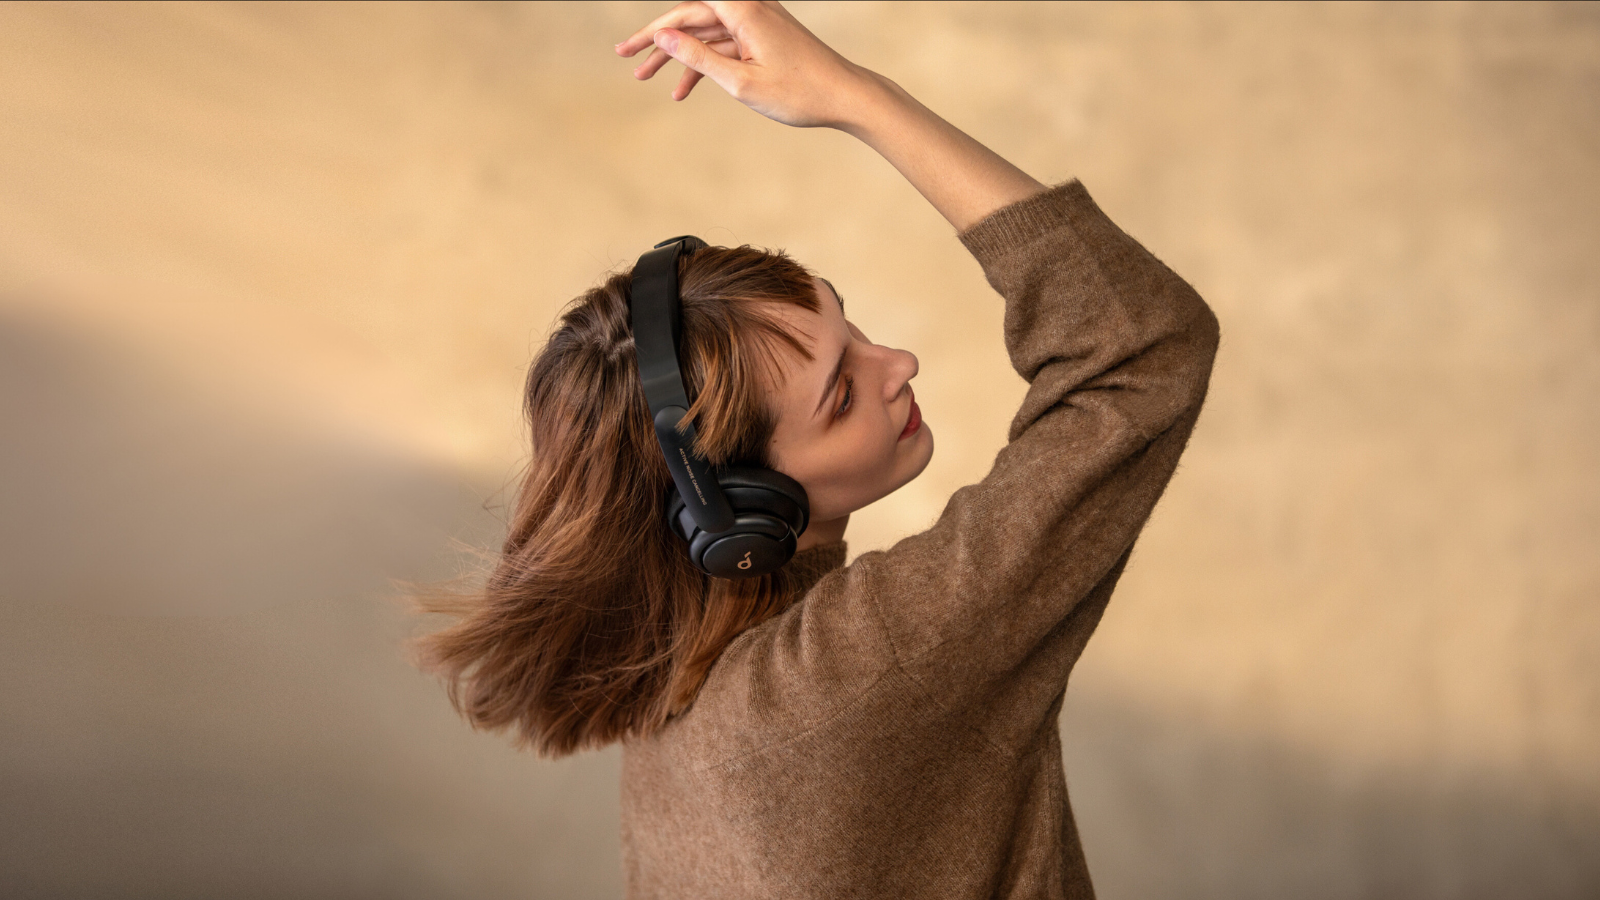 Woman wearing Anker Soundcore headphones 